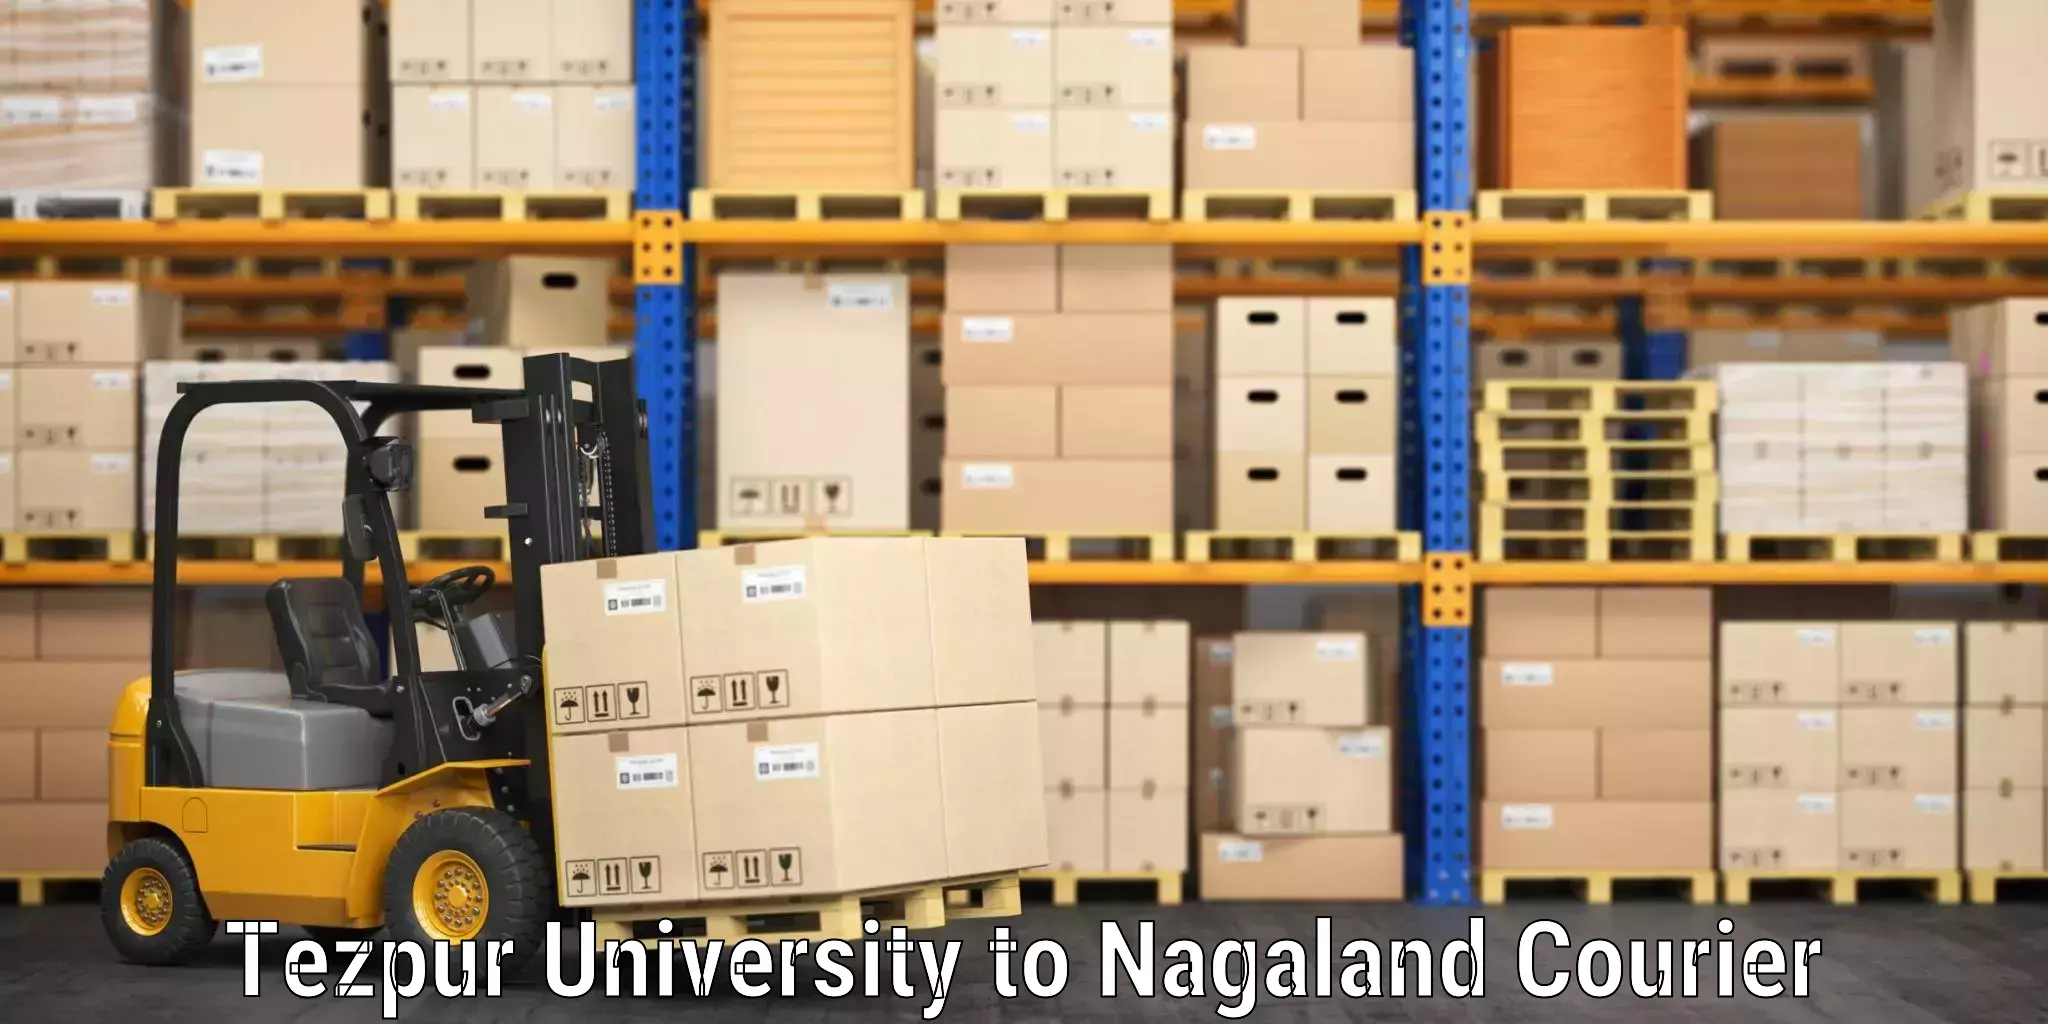 Luggage transport service Tezpur University to Nagaland